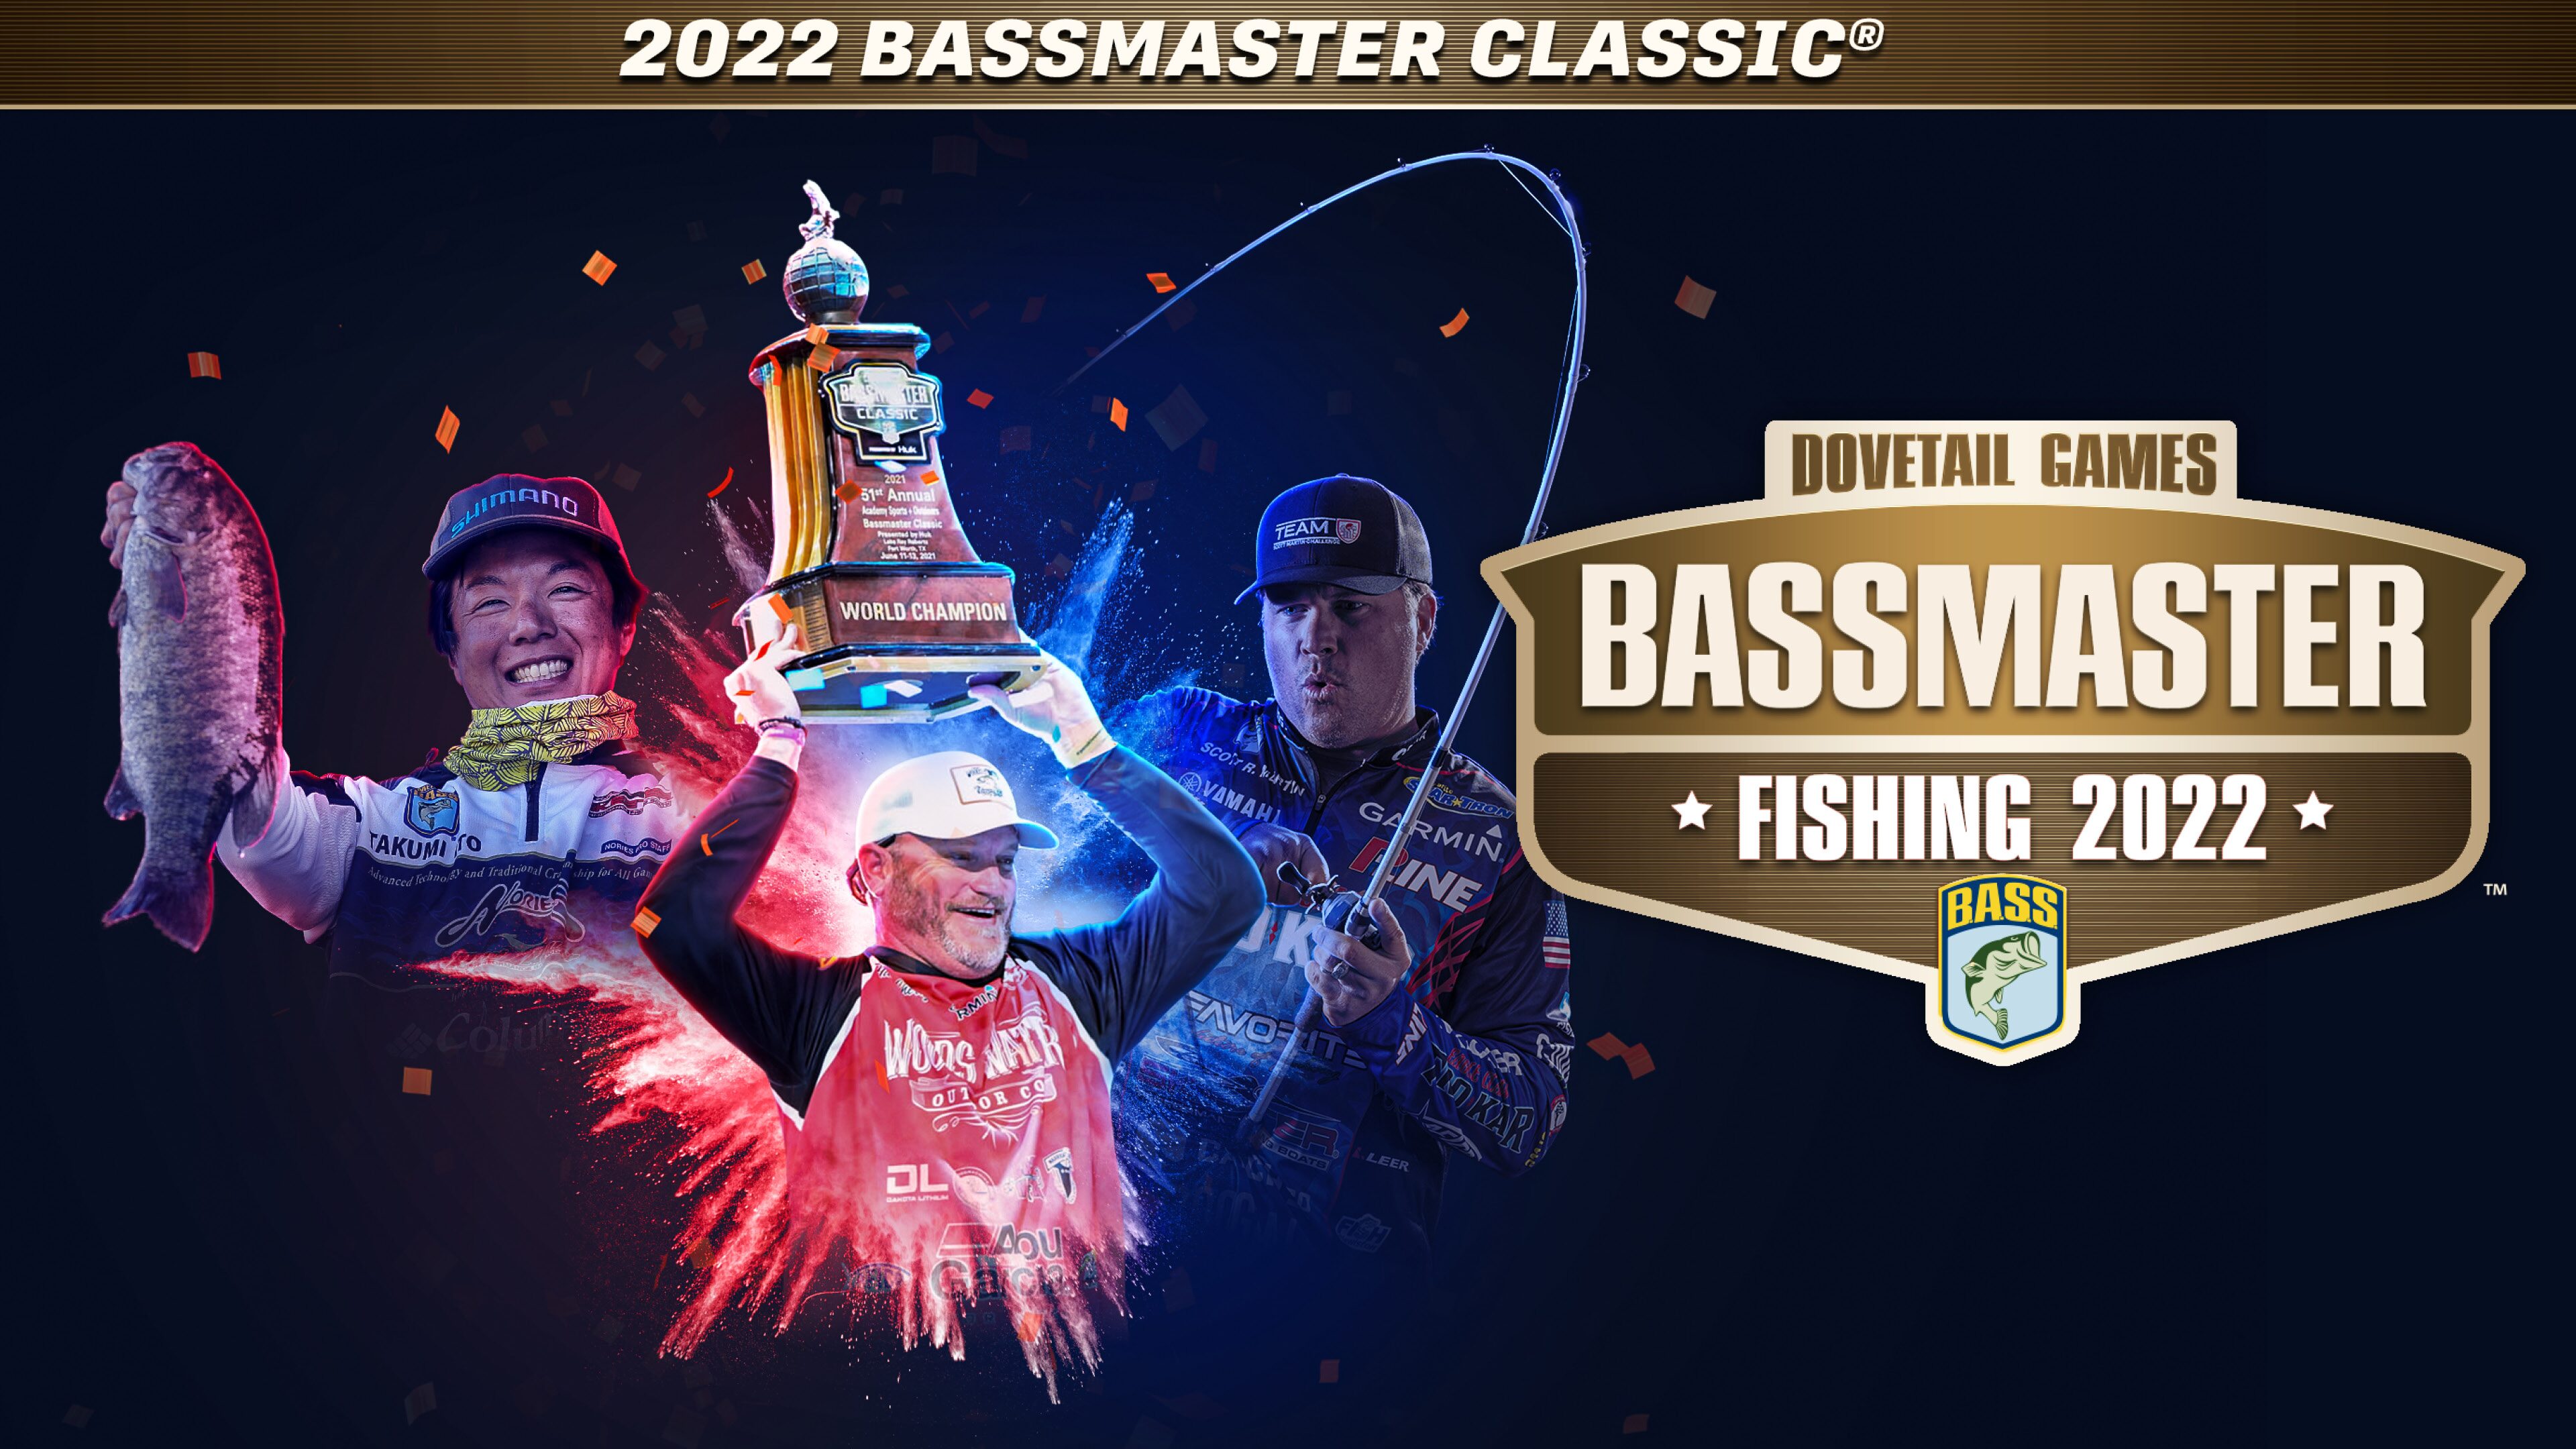 2022 Bassmaster Classic®